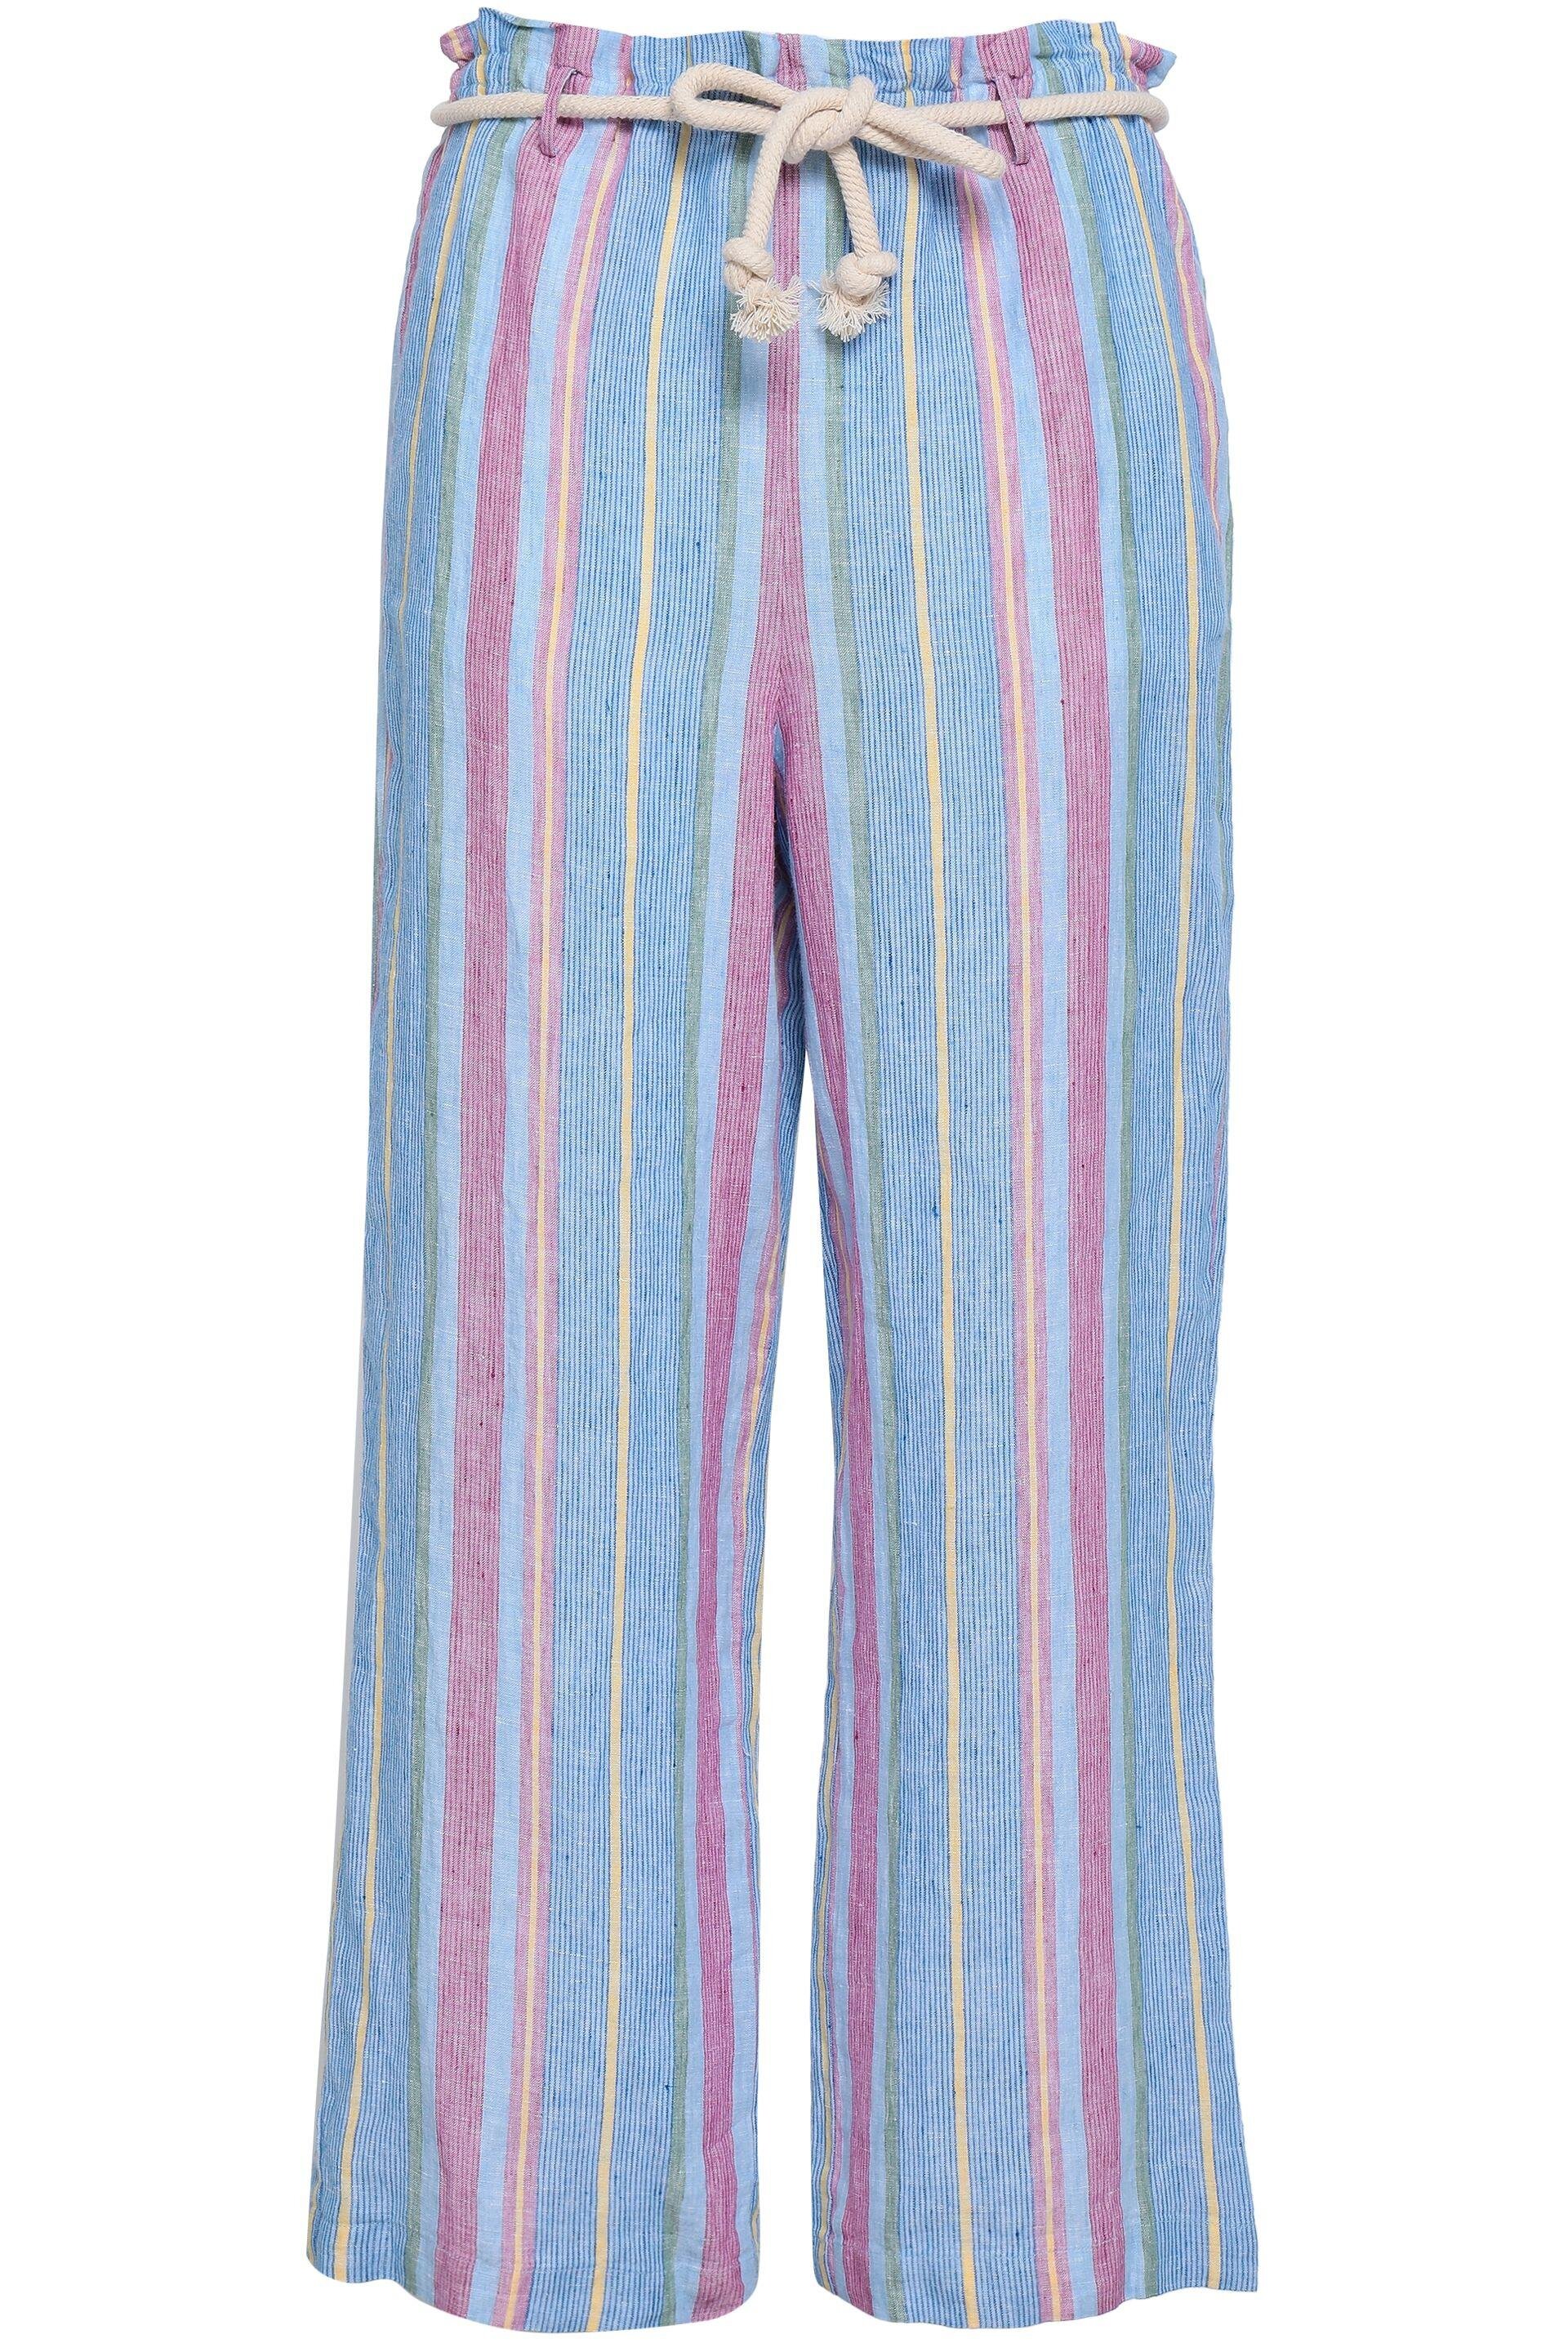 Frame Tie-Waist Striped Linen Trousers.jpg